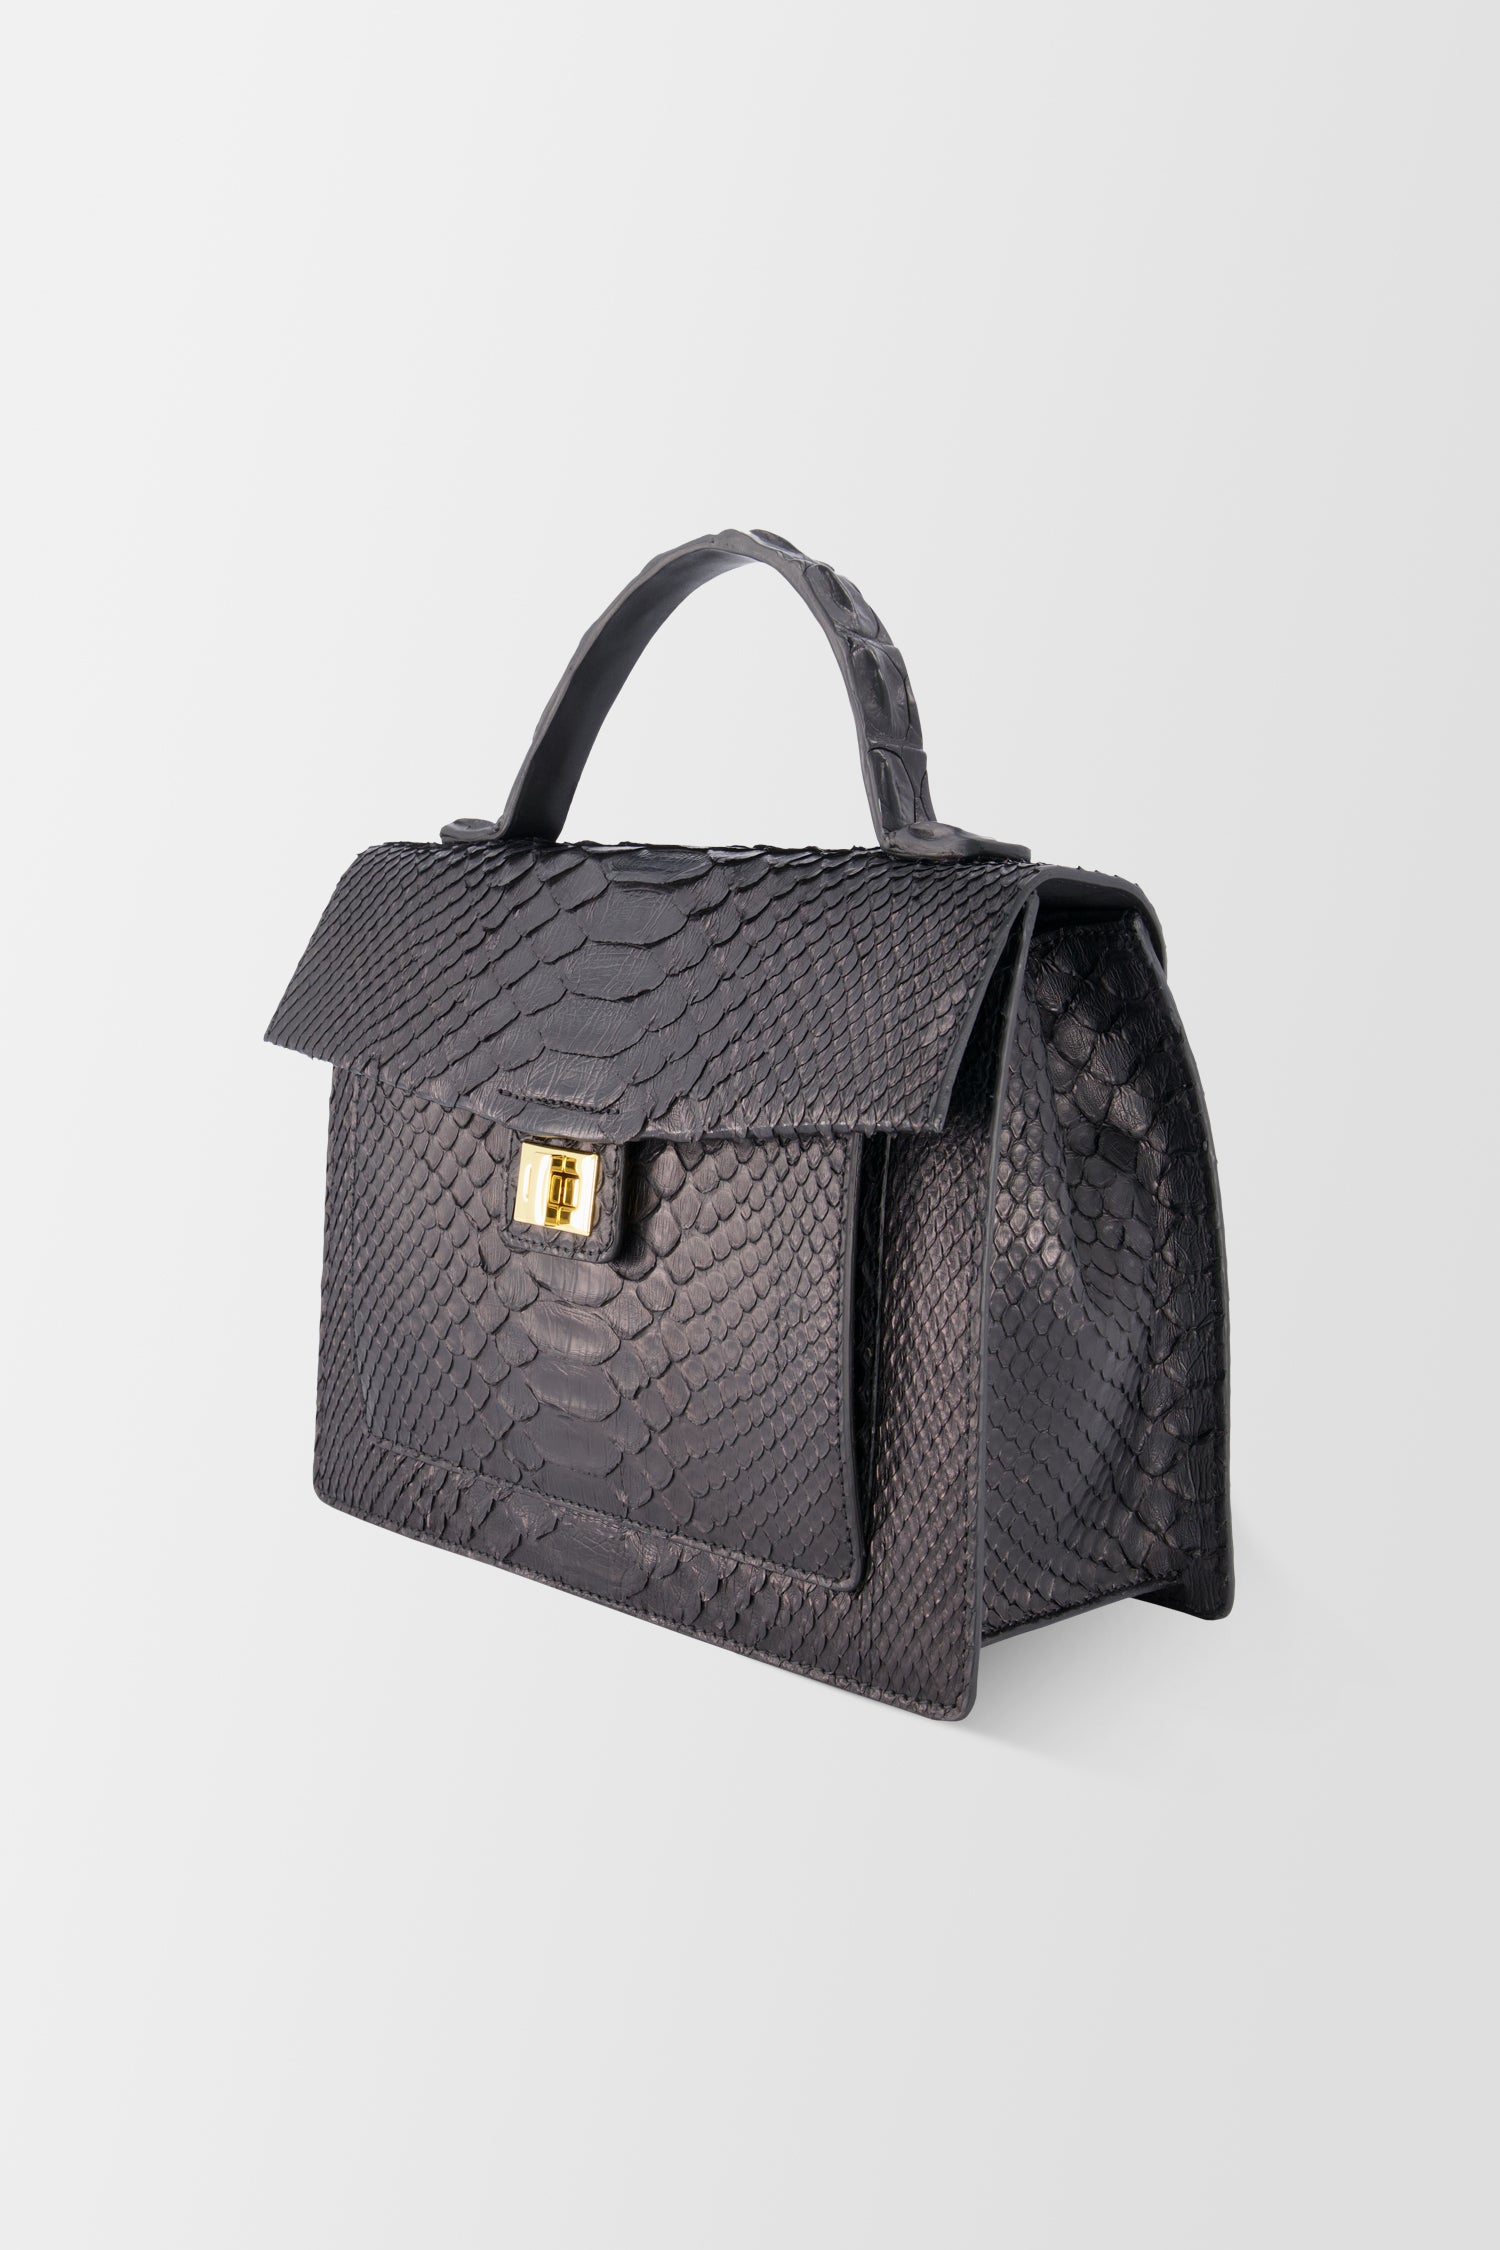 Krenoir Black Python Croco Large Kandie Handbag